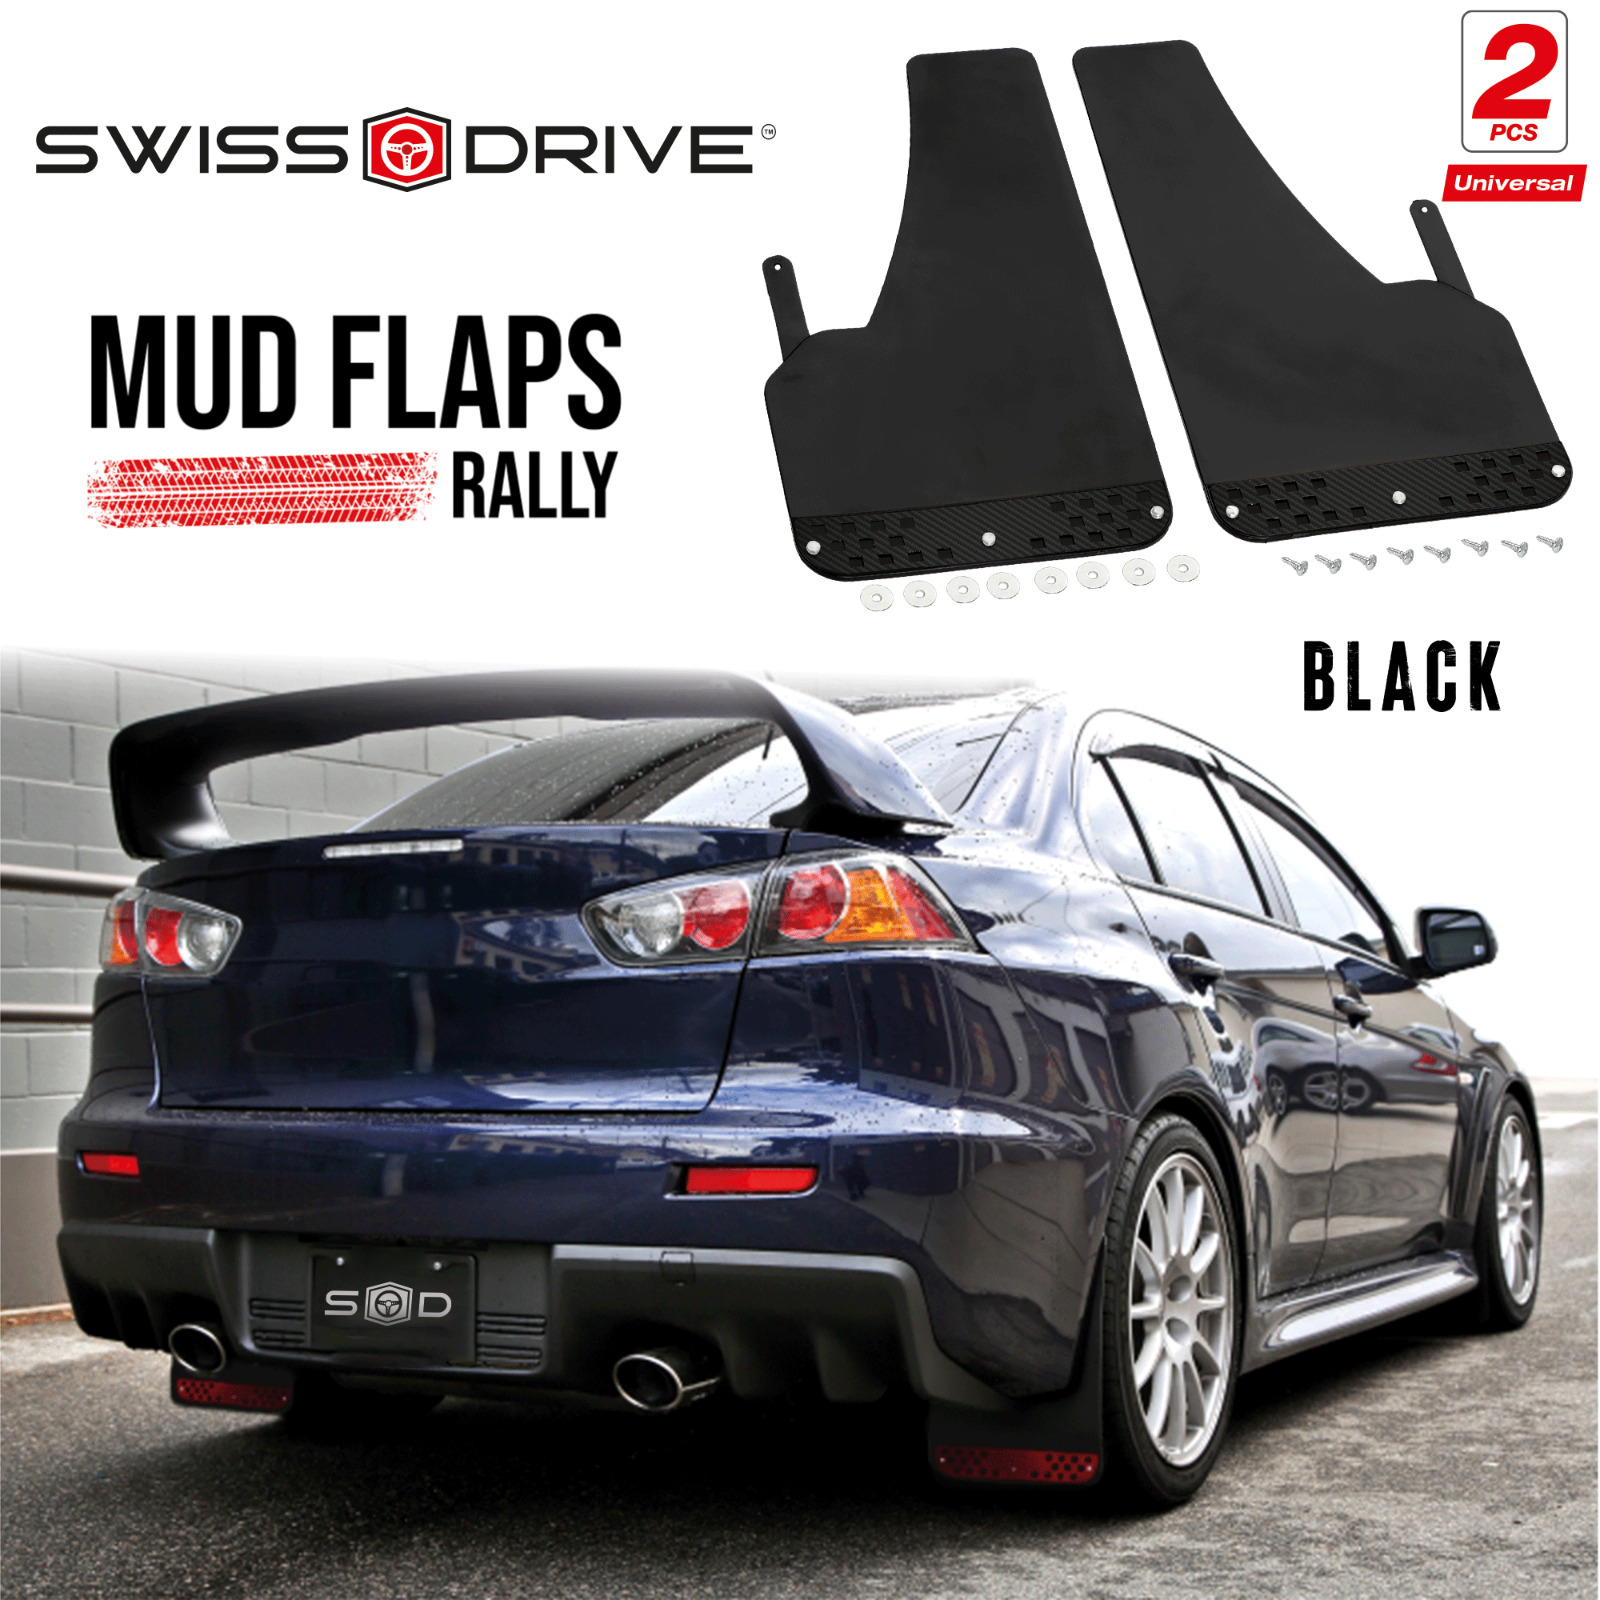 Swiss Drive Rally Carbon Fiber Basic Universal Mud Flaps Car Set of 2 Pcs BLACK